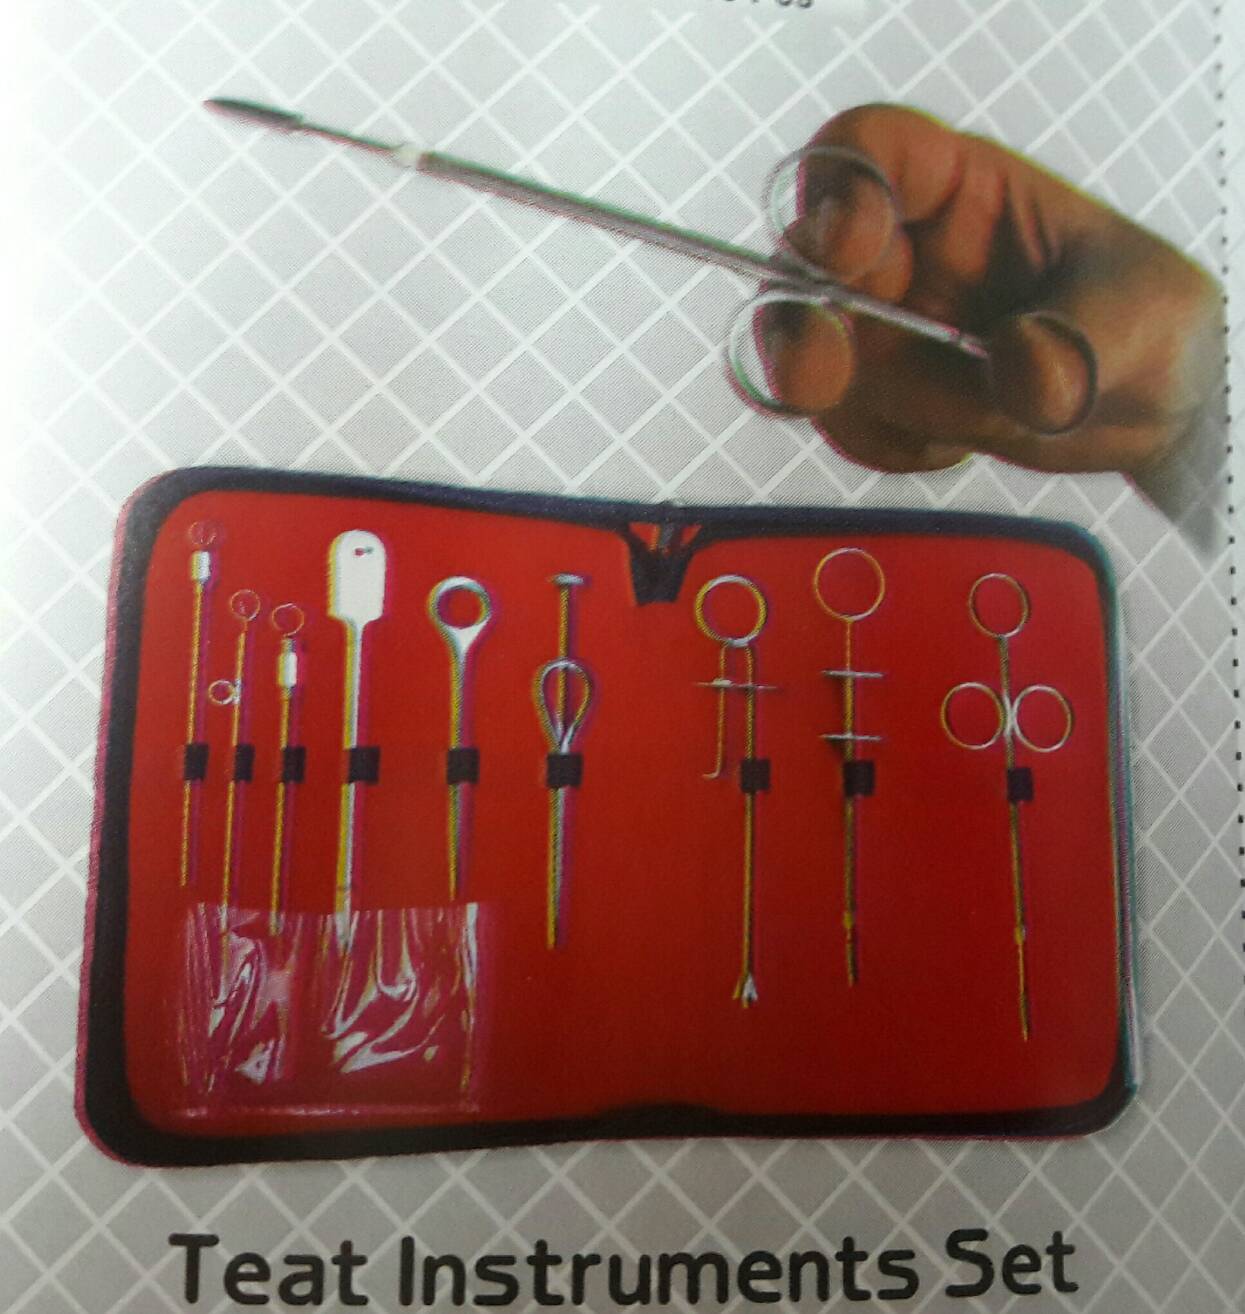 Teat Instruments set